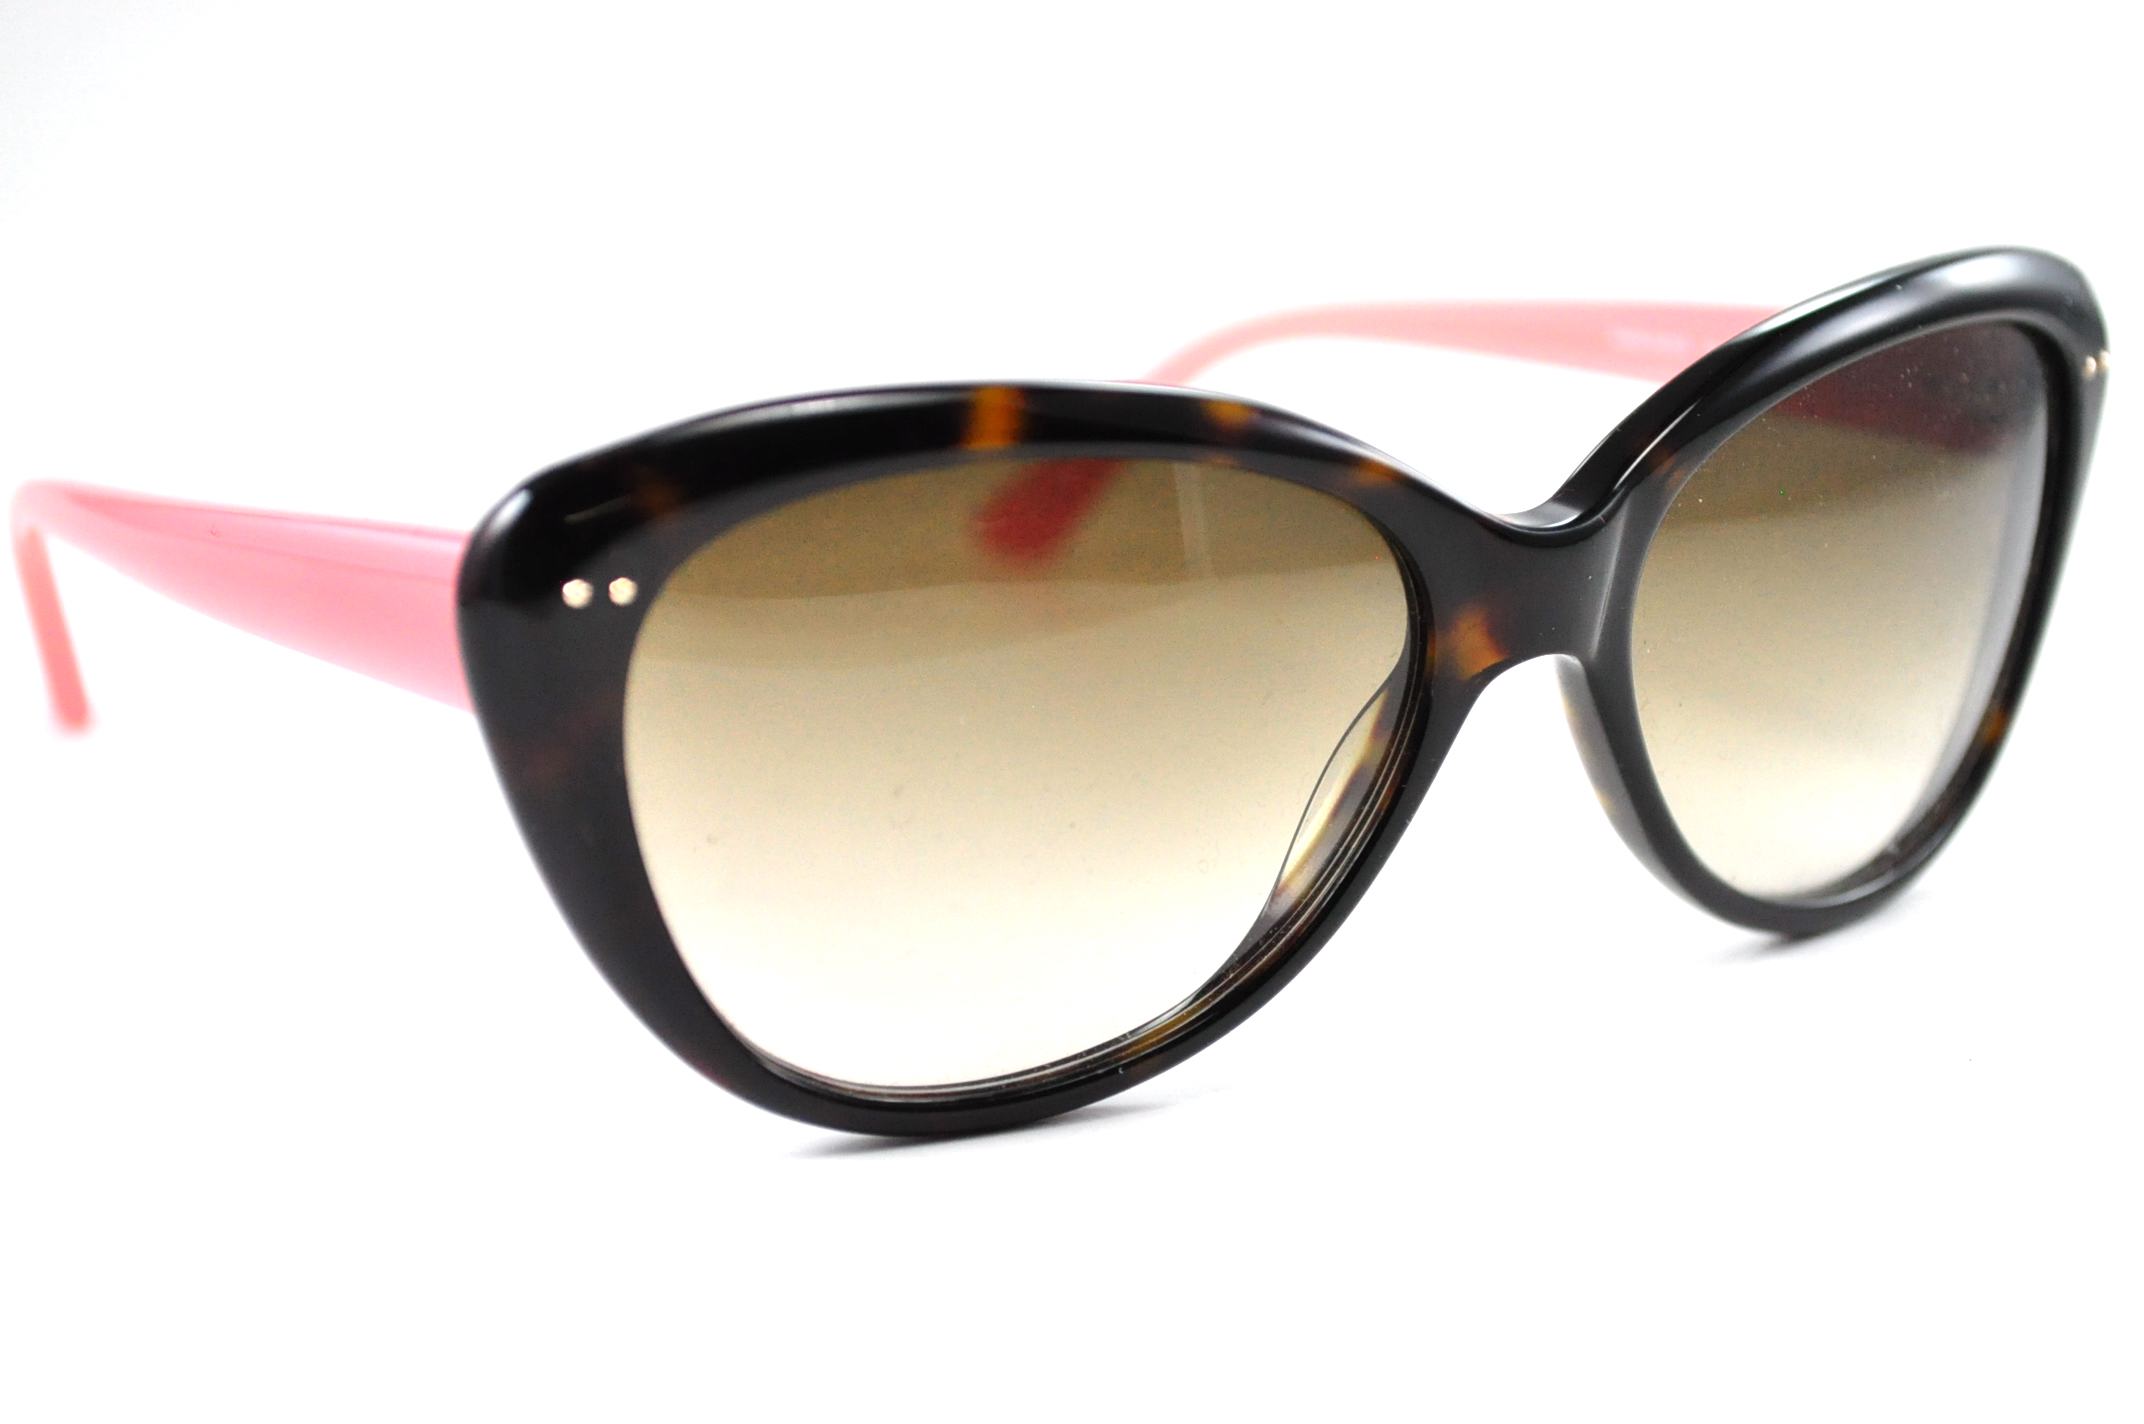 Kate Spade Angelique Women Sunglasses Tortoise Blush - image 2 of 3